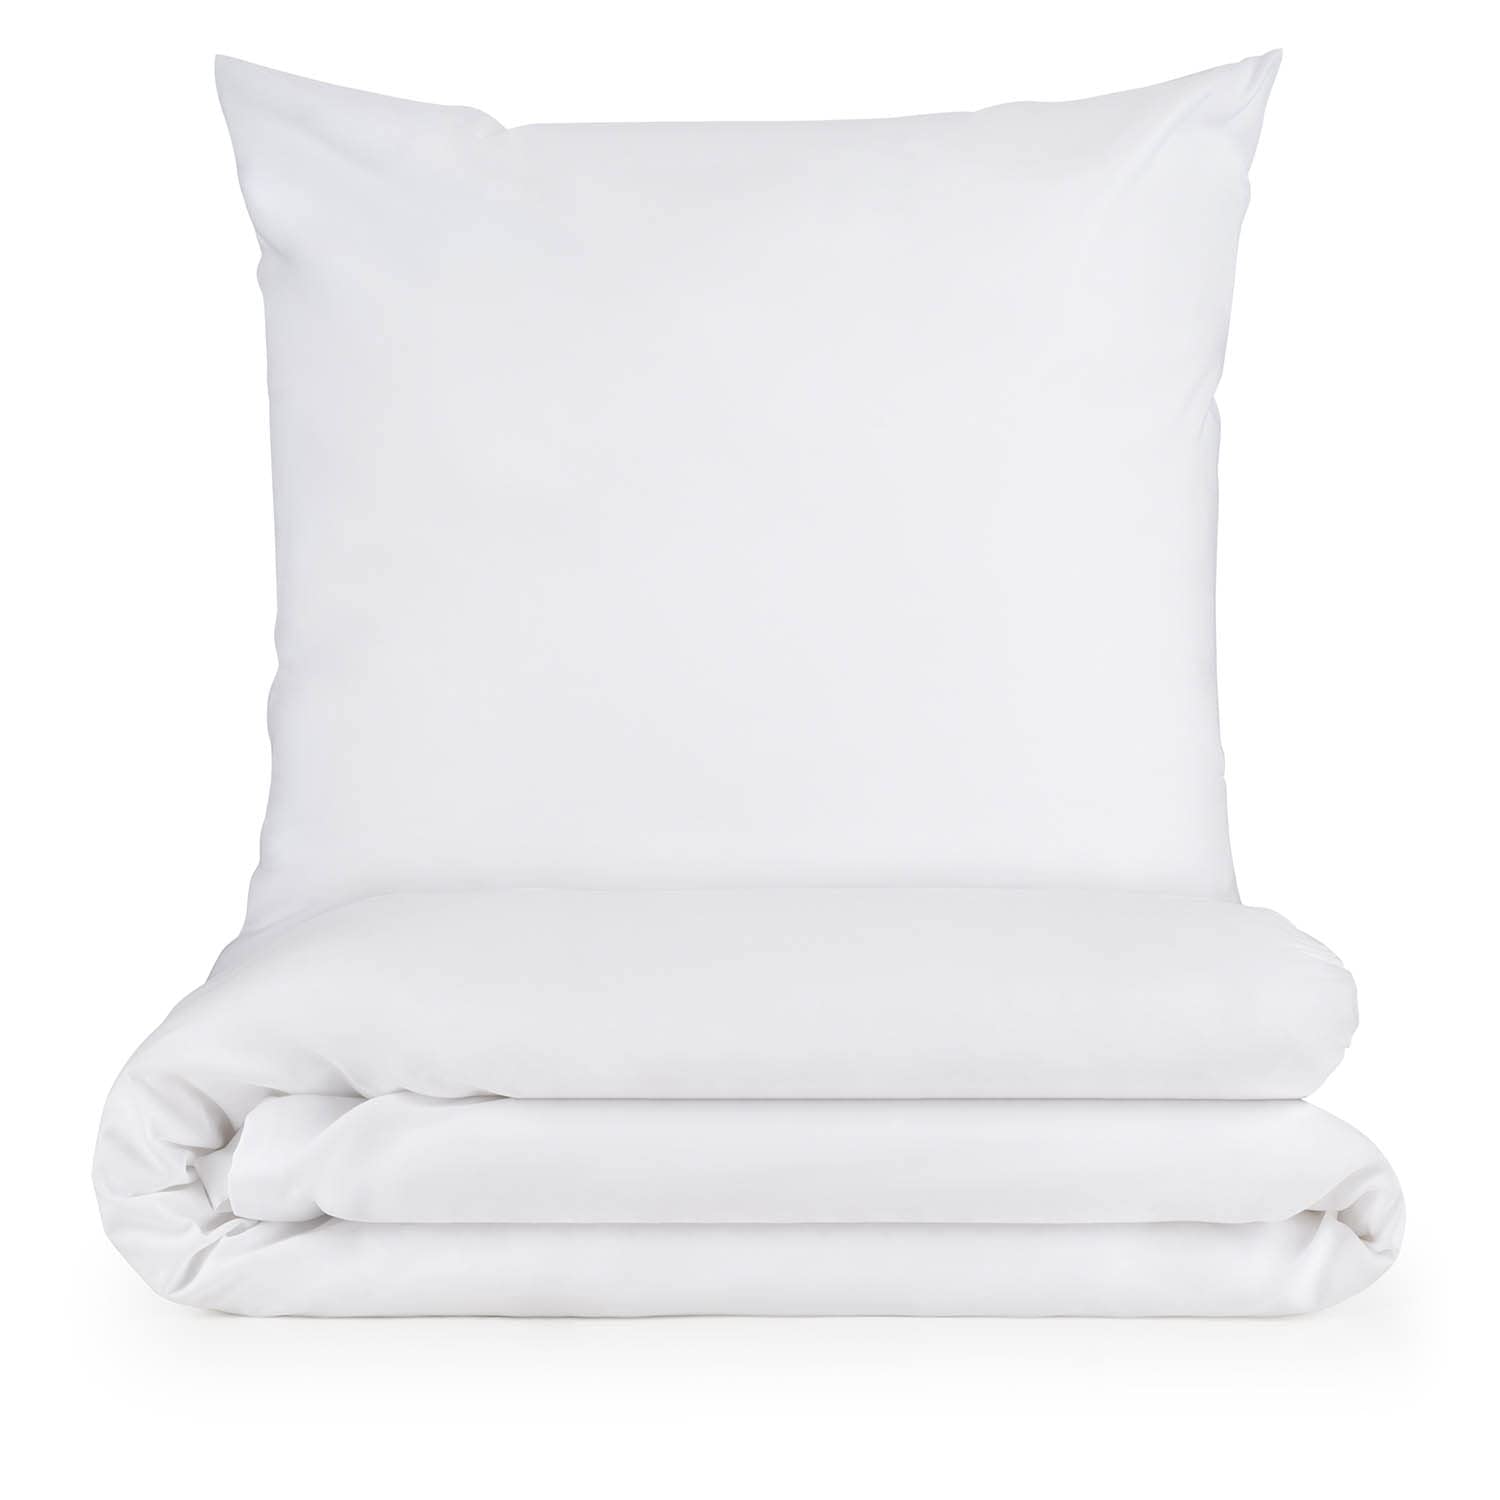 Set Bettbezug Polyester Weiß